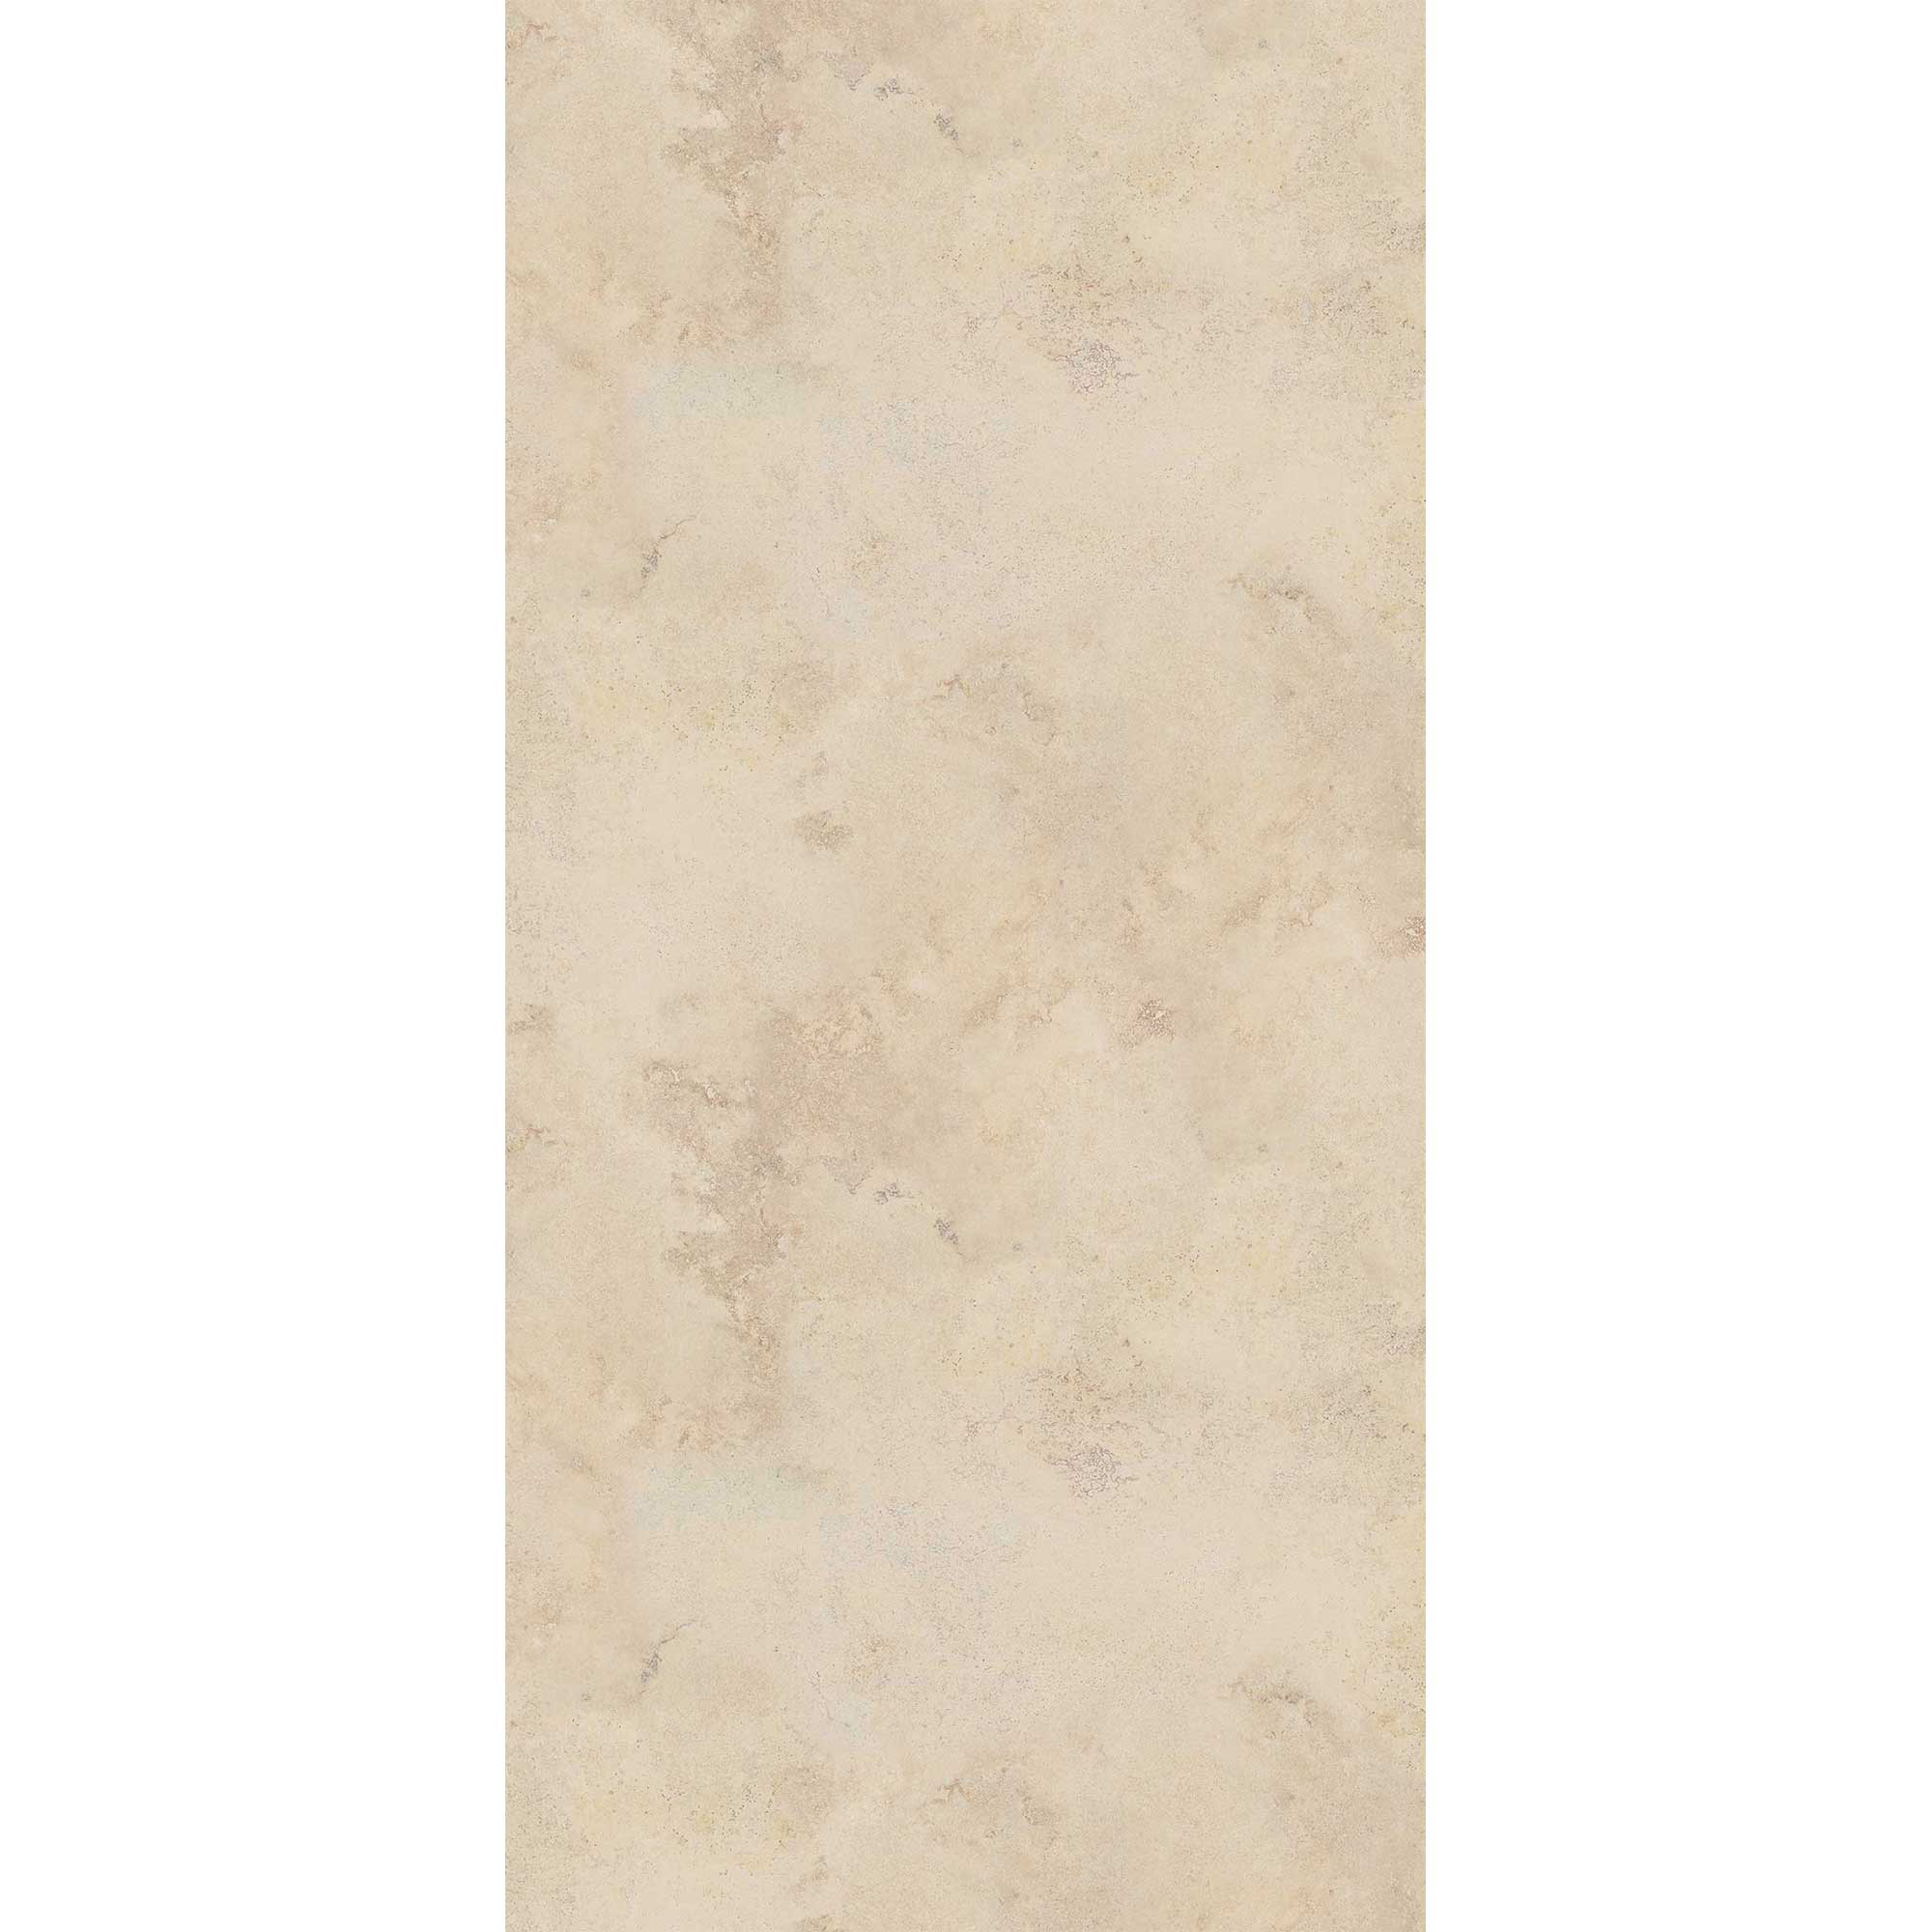 Duschrückwand Marmoroptik sandfarben 150 x 255 cm + product picture